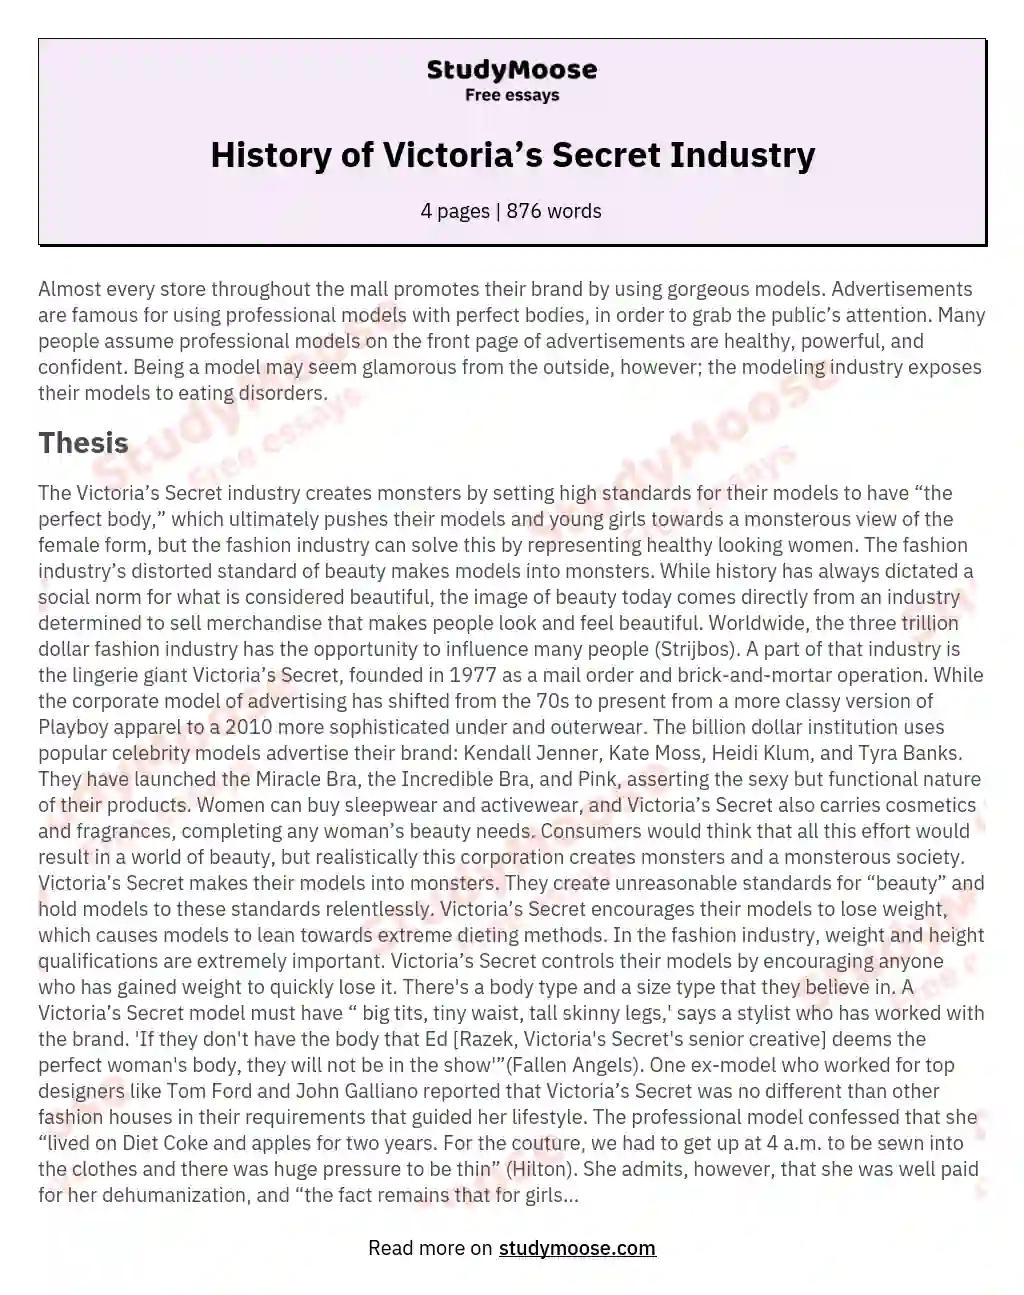 History of Victoria’s Secret Industry essay